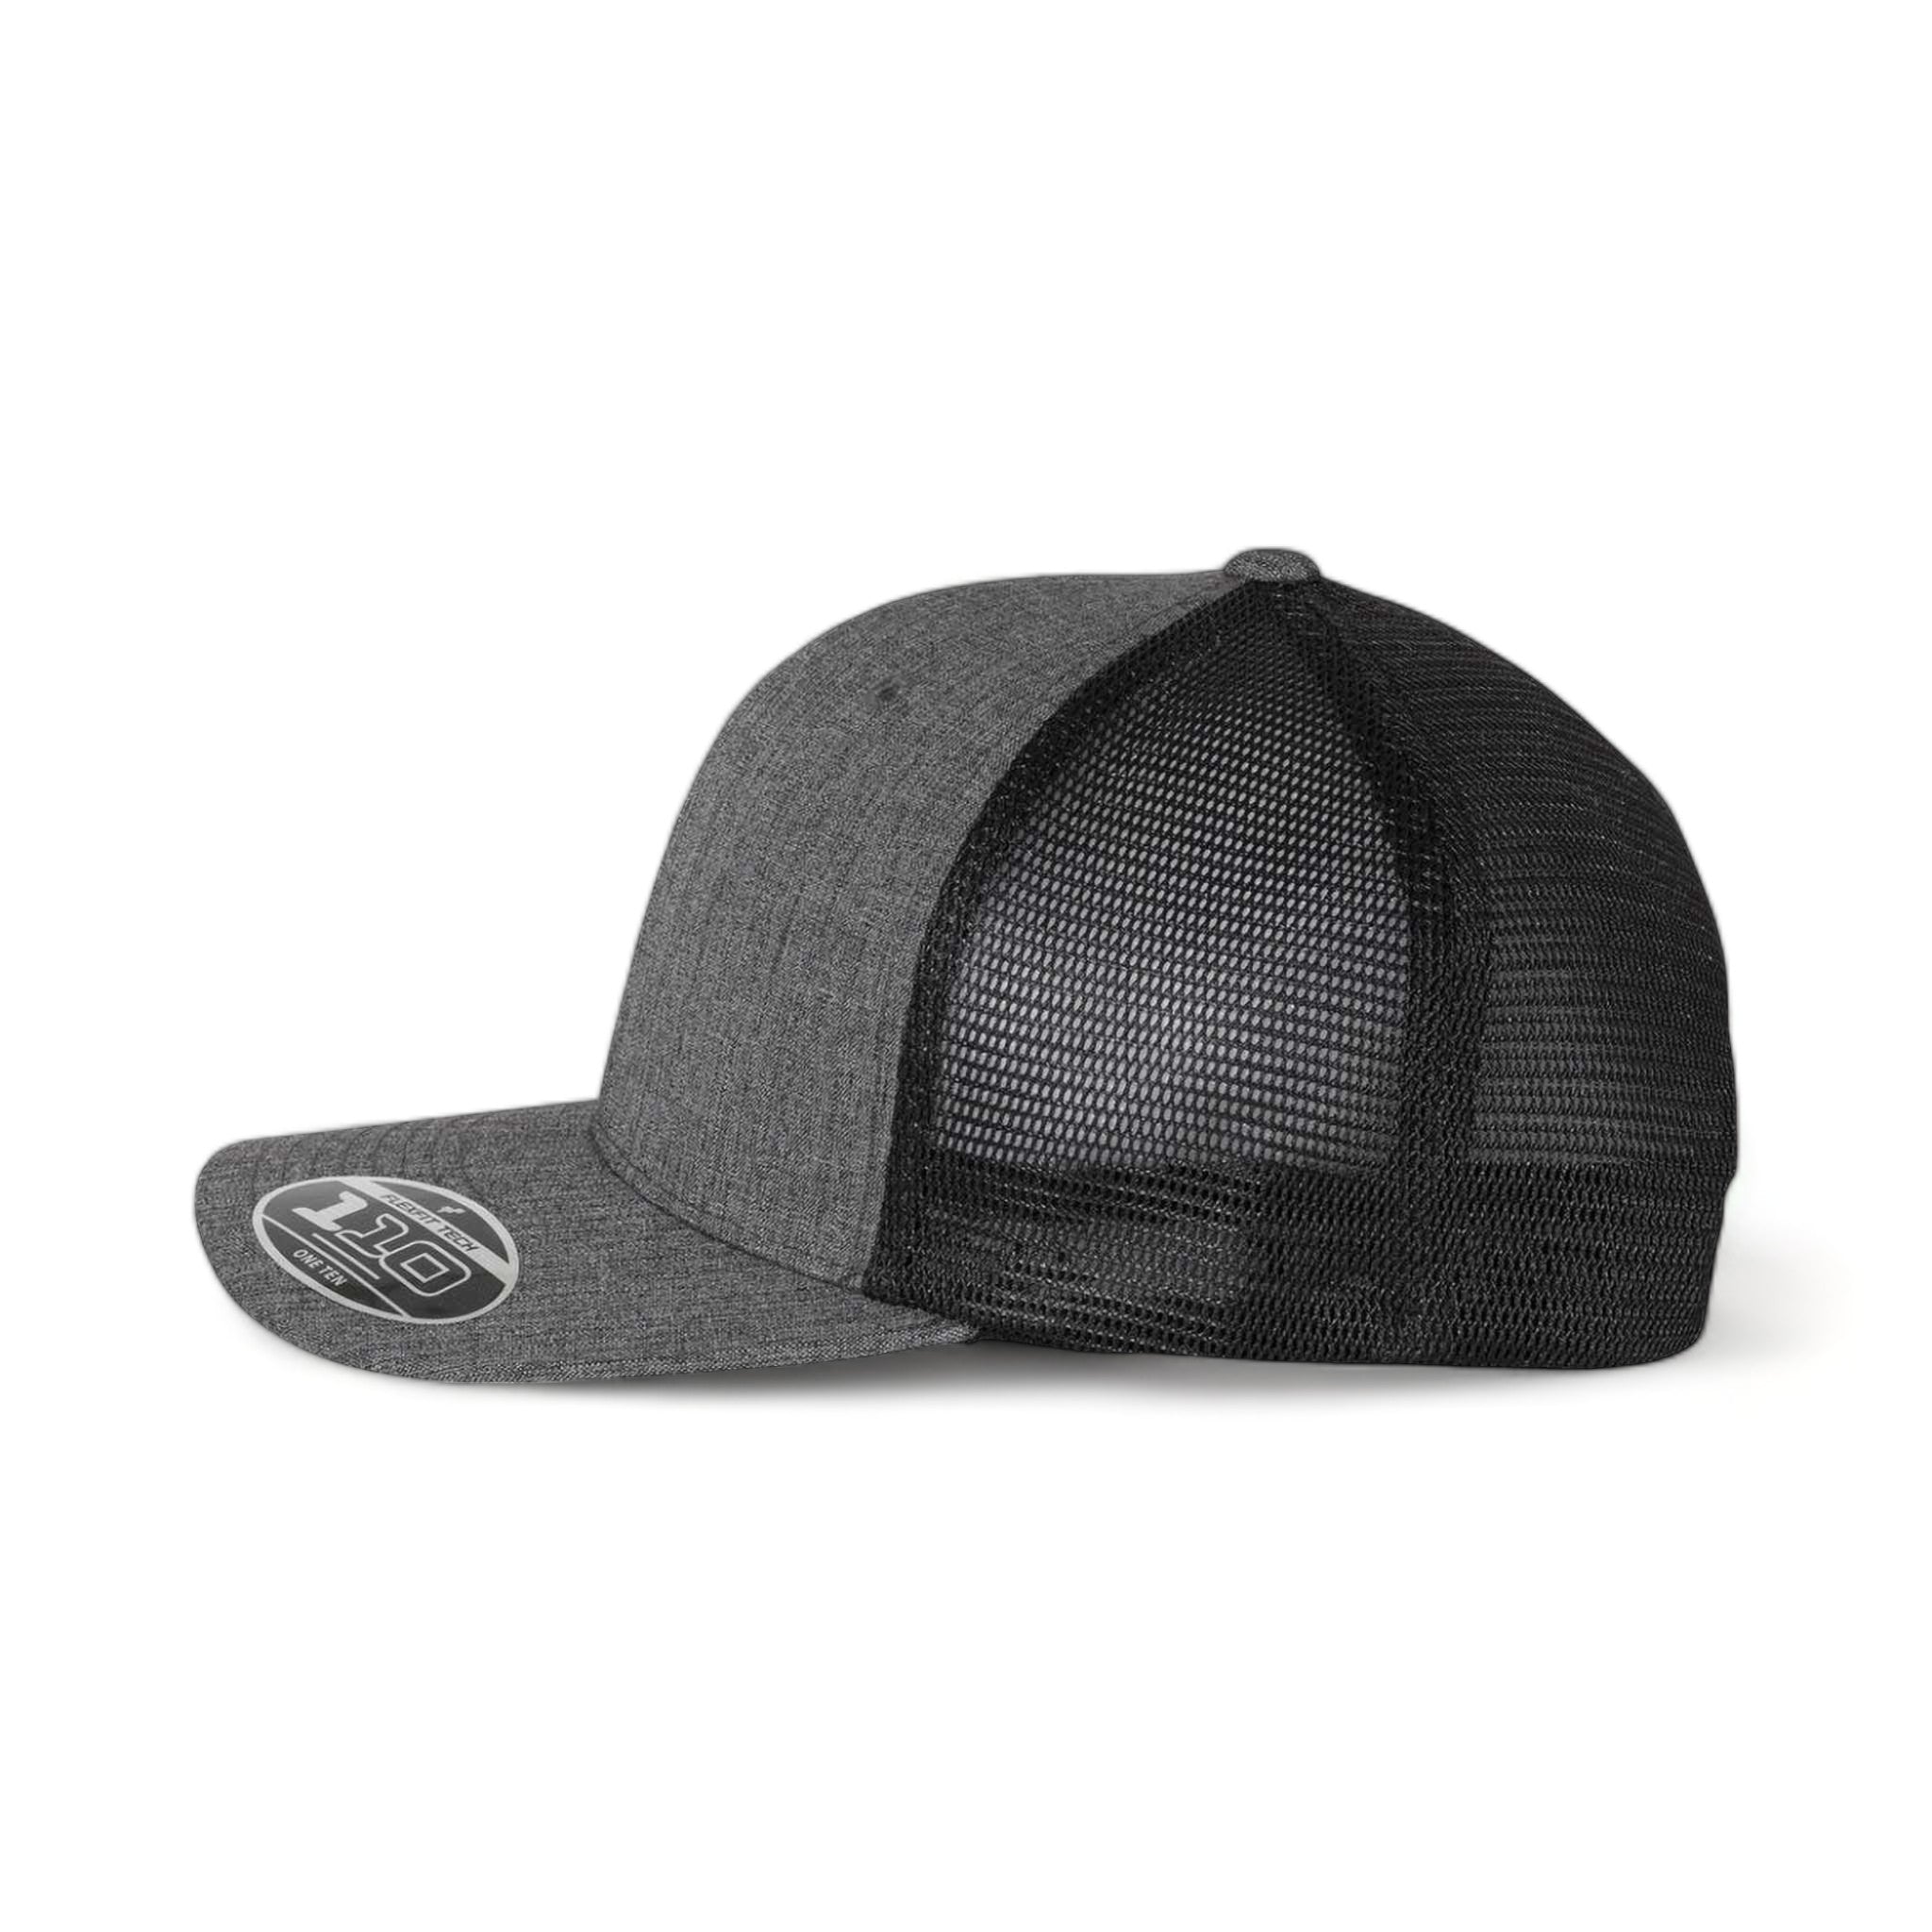 Side view of Flexfit 110M custom hat in melange charcoal and black